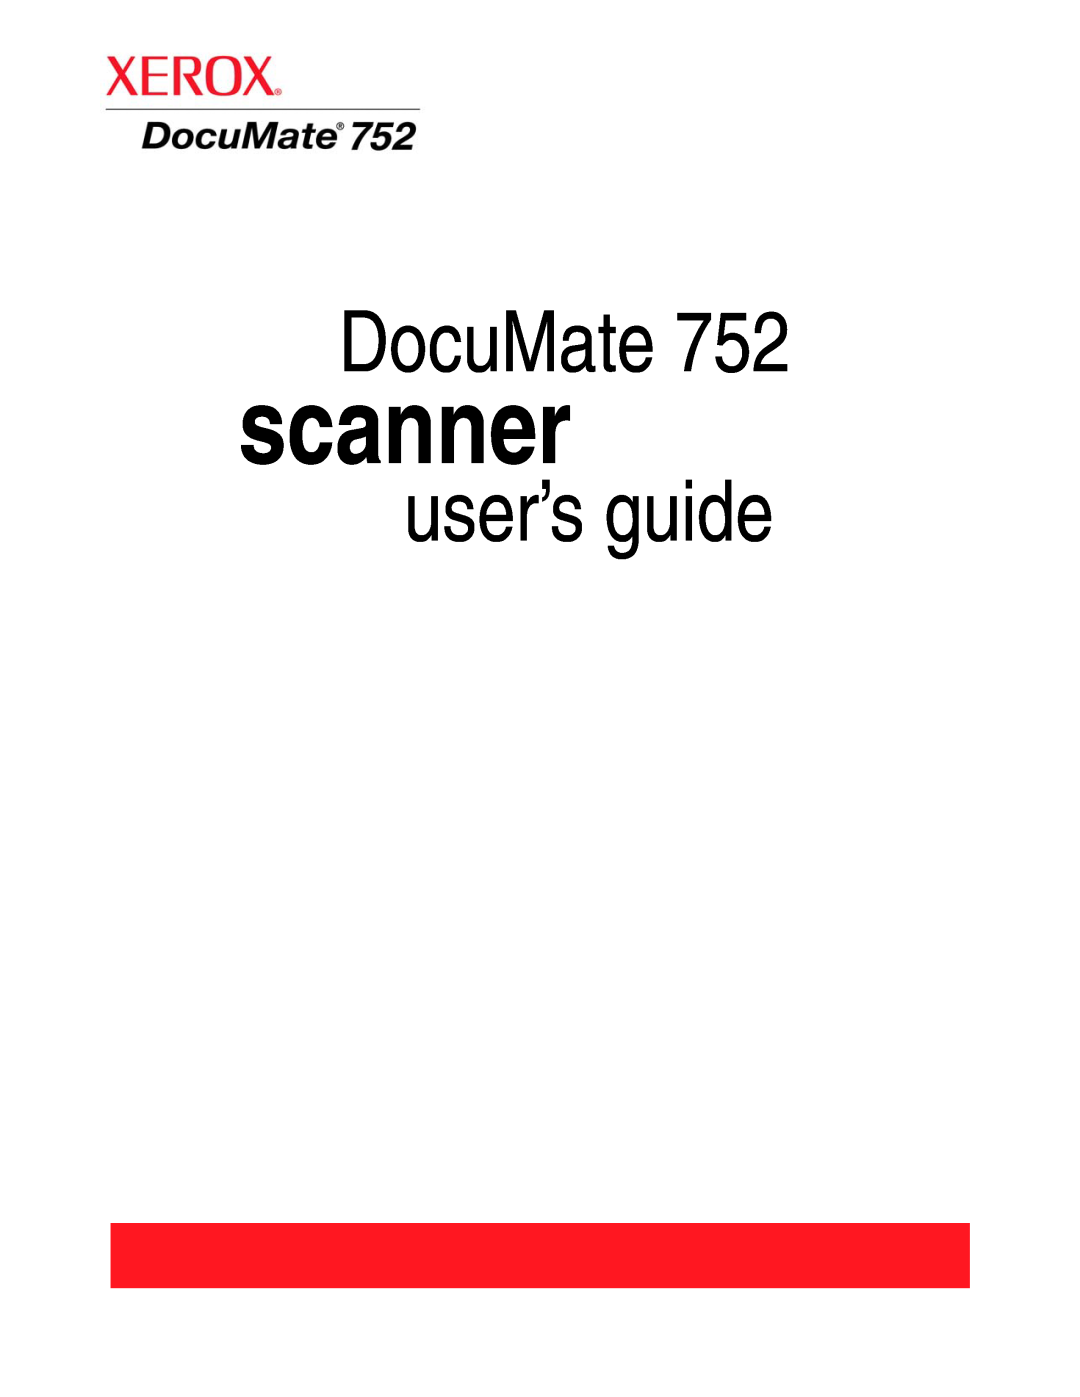 Xerox 752 manual scanner, DocuMate, user’s guide 